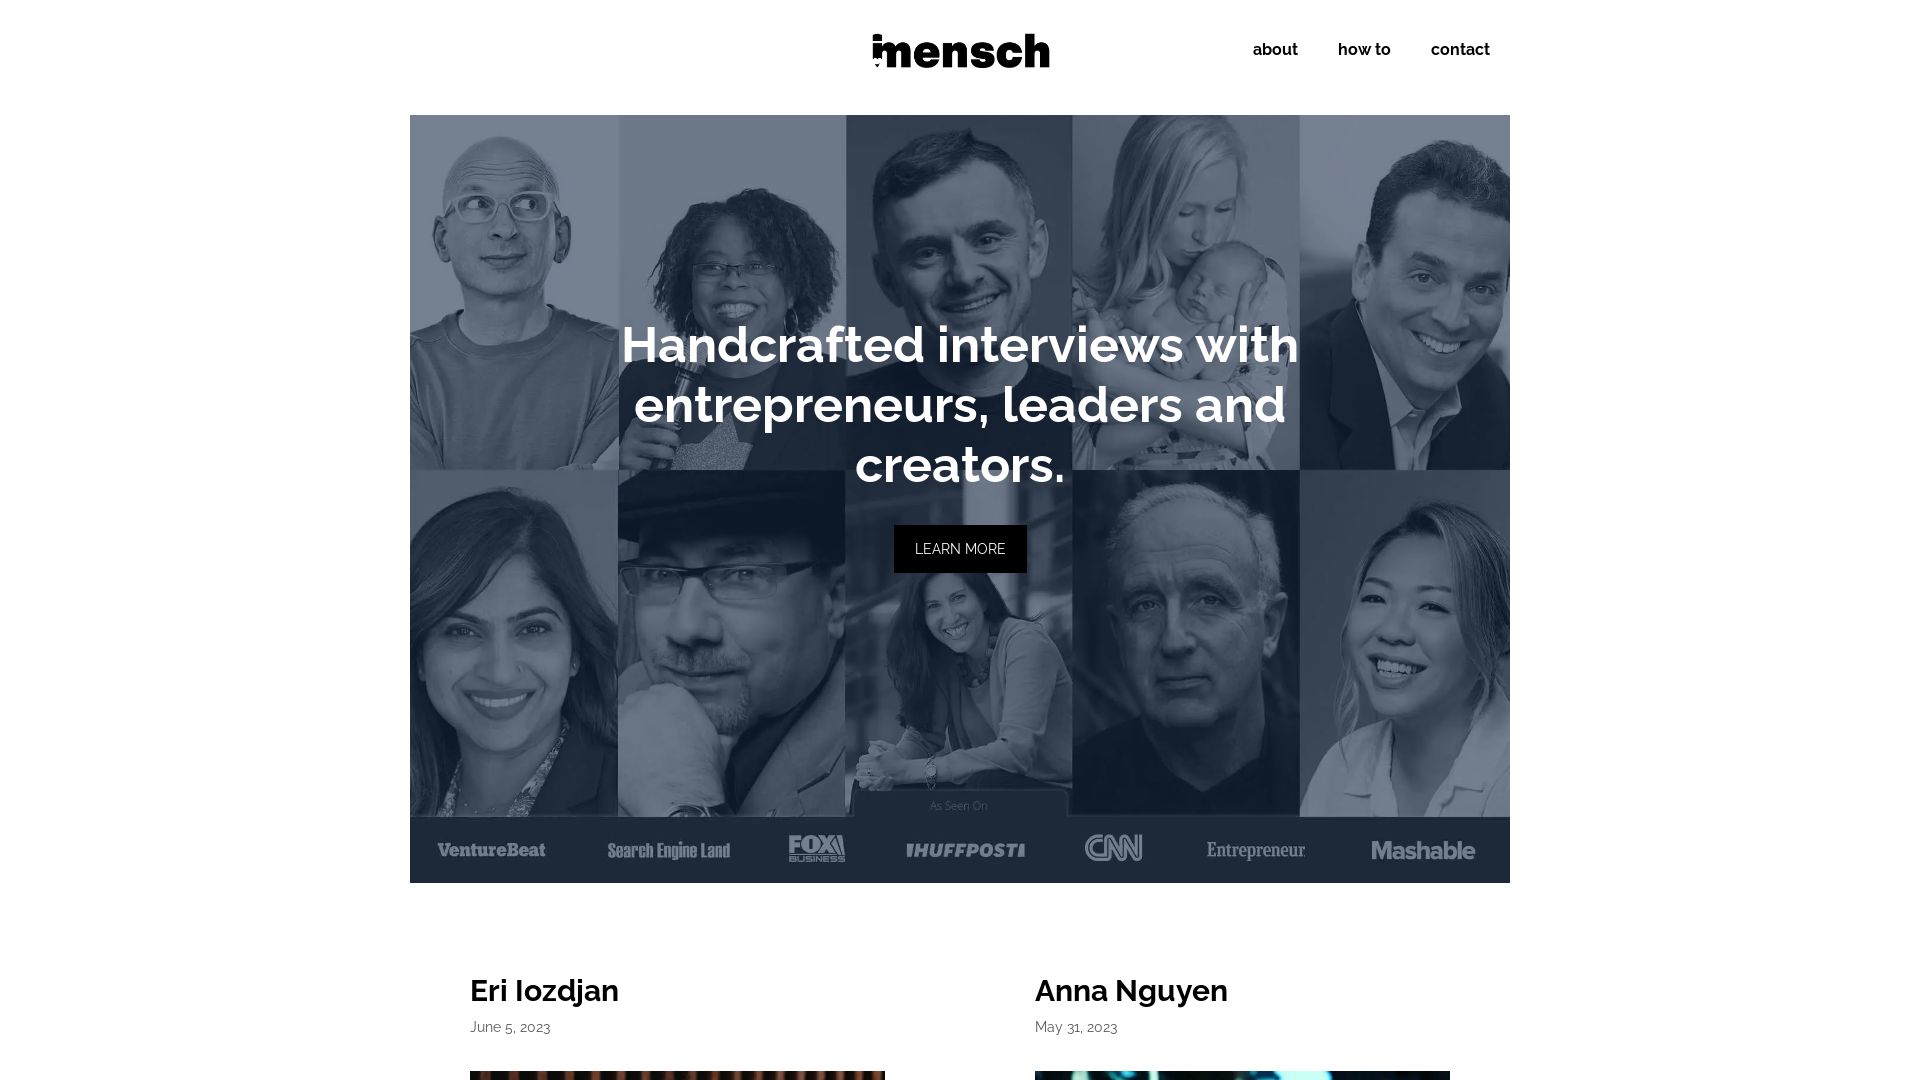 Website status ideamensch.com is   ONLINE